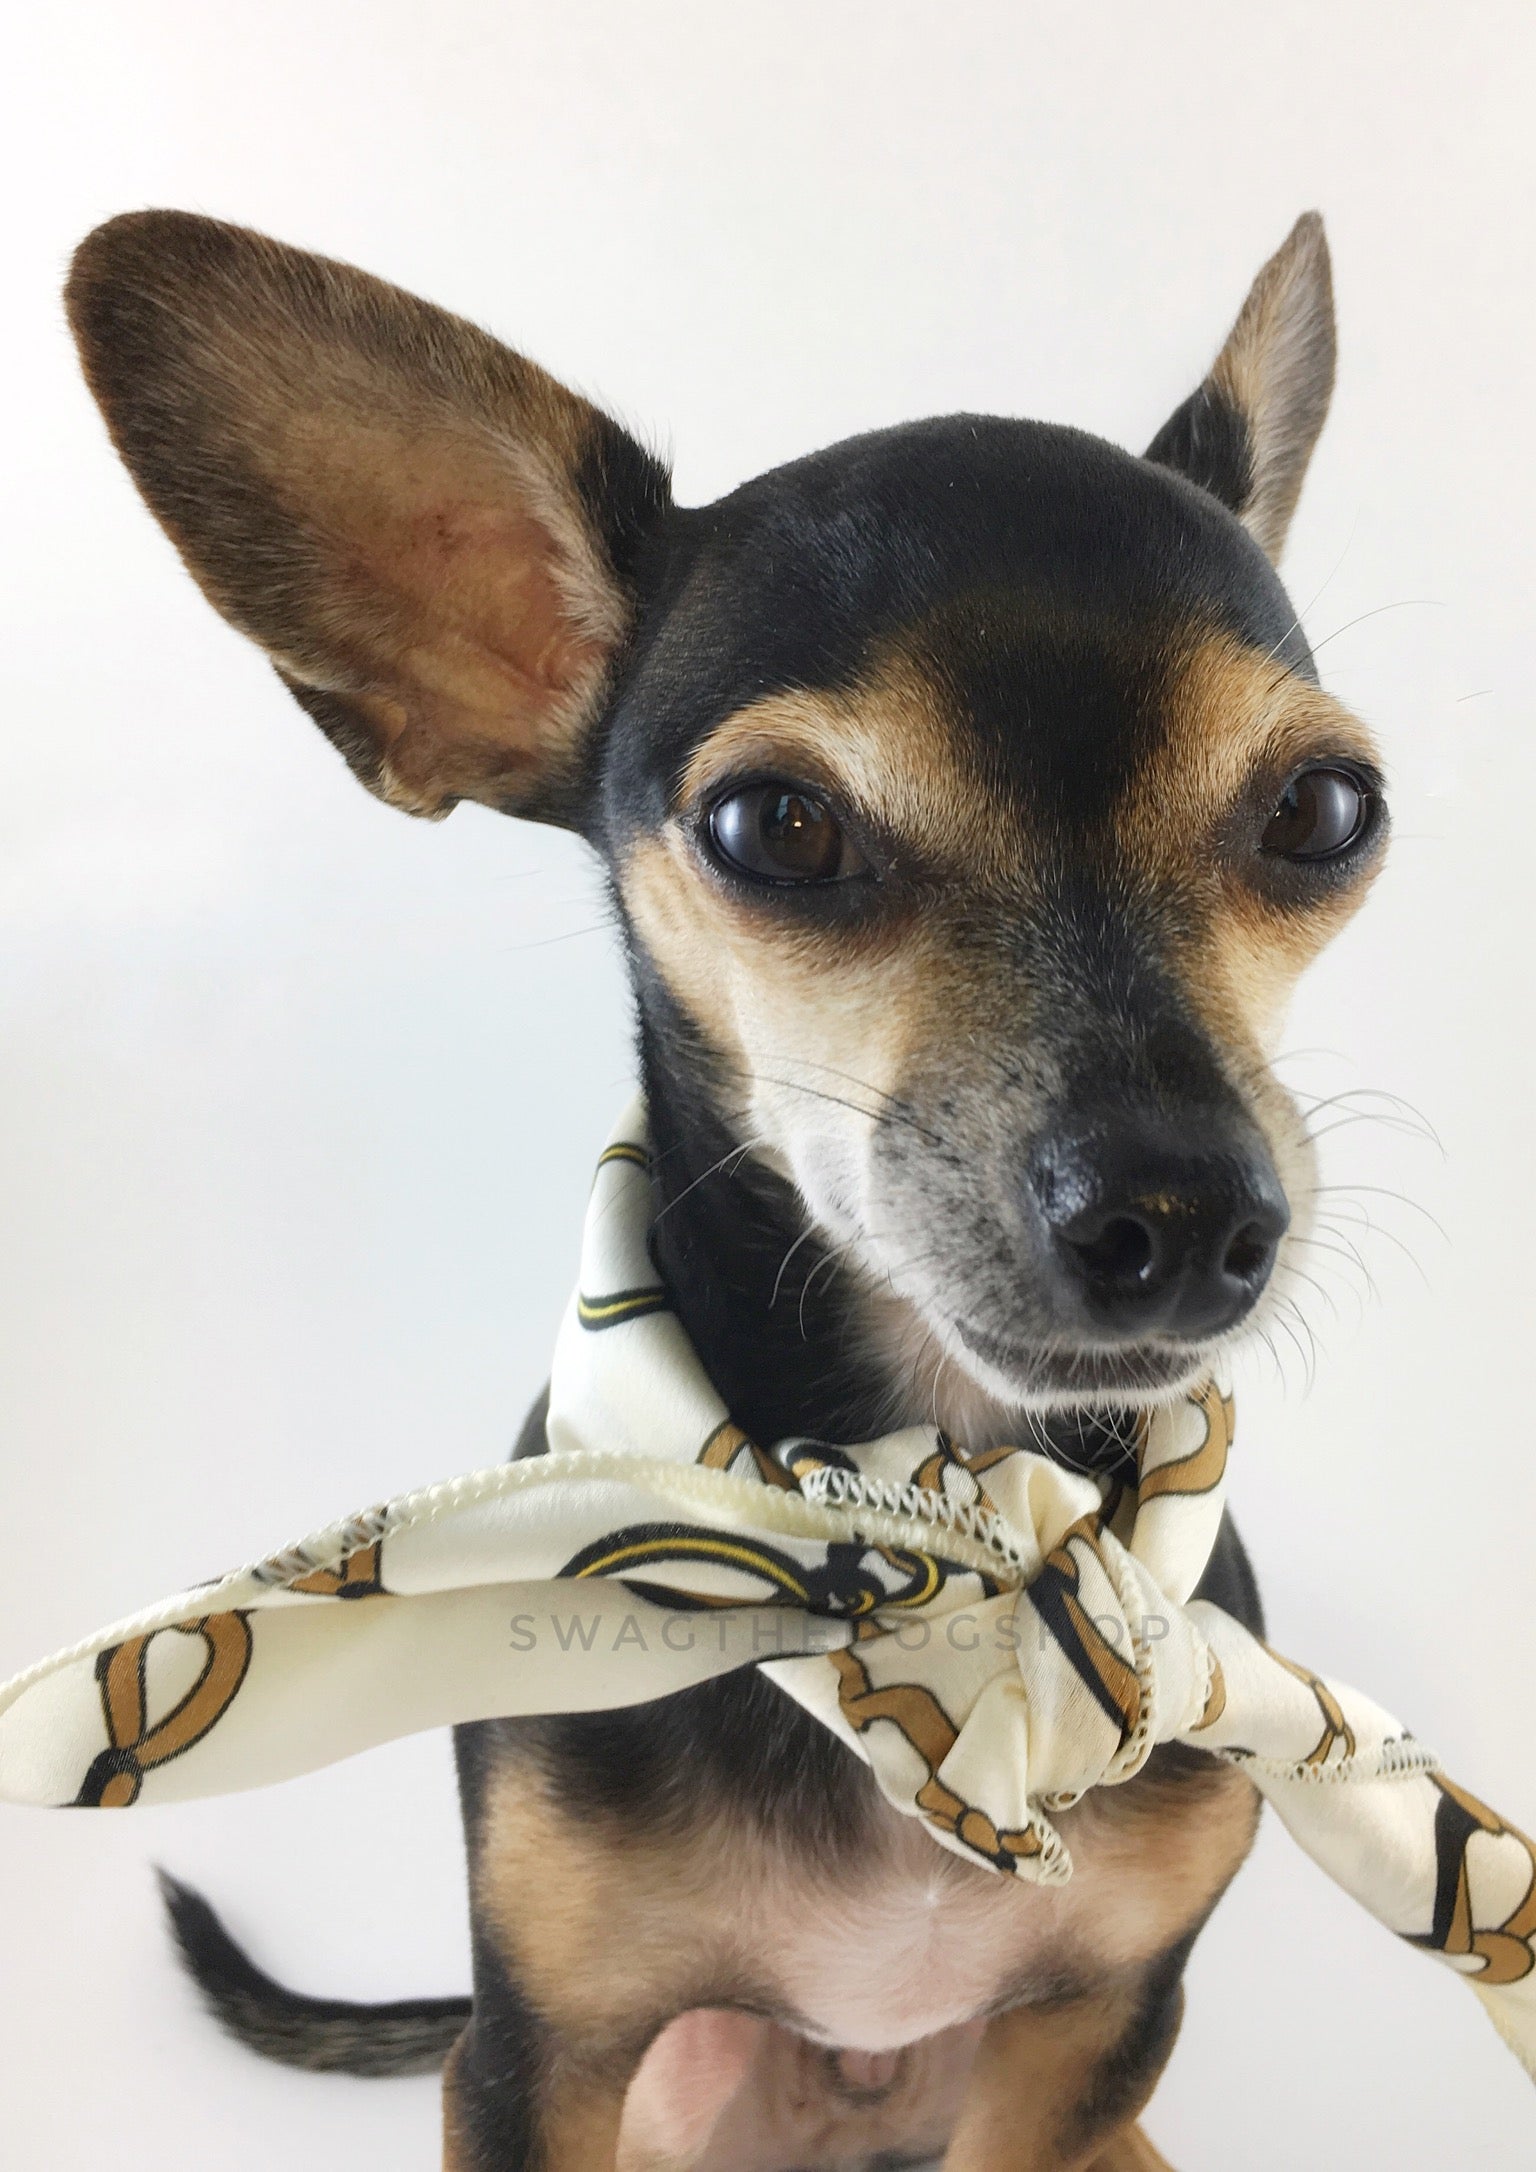 24K Vanilla Gold Swagdana Scarf - Bust of Cute Chihuahua Wearing Swagdana Scarf as Neck Scarf. Dog Bandana. Dog Scarf